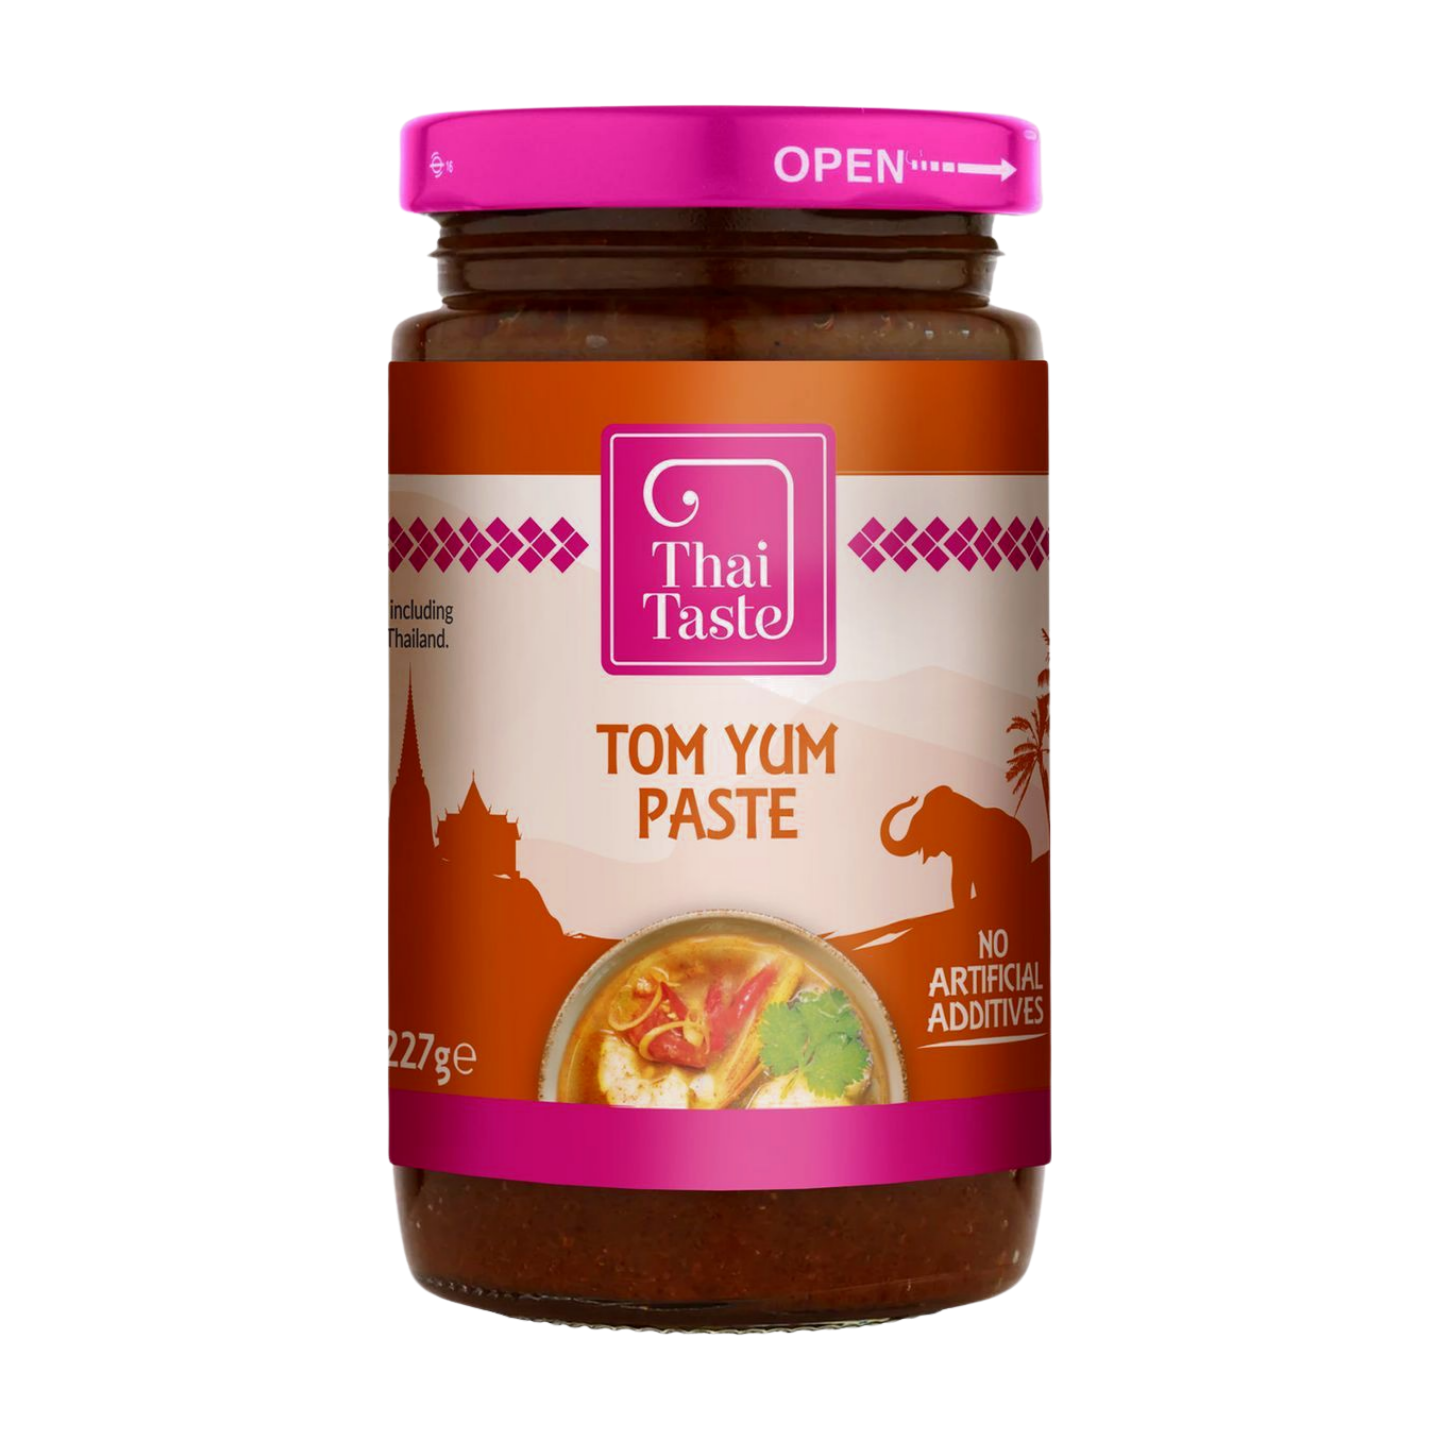 Thai Taste Tom Yum Paste (6x227g)